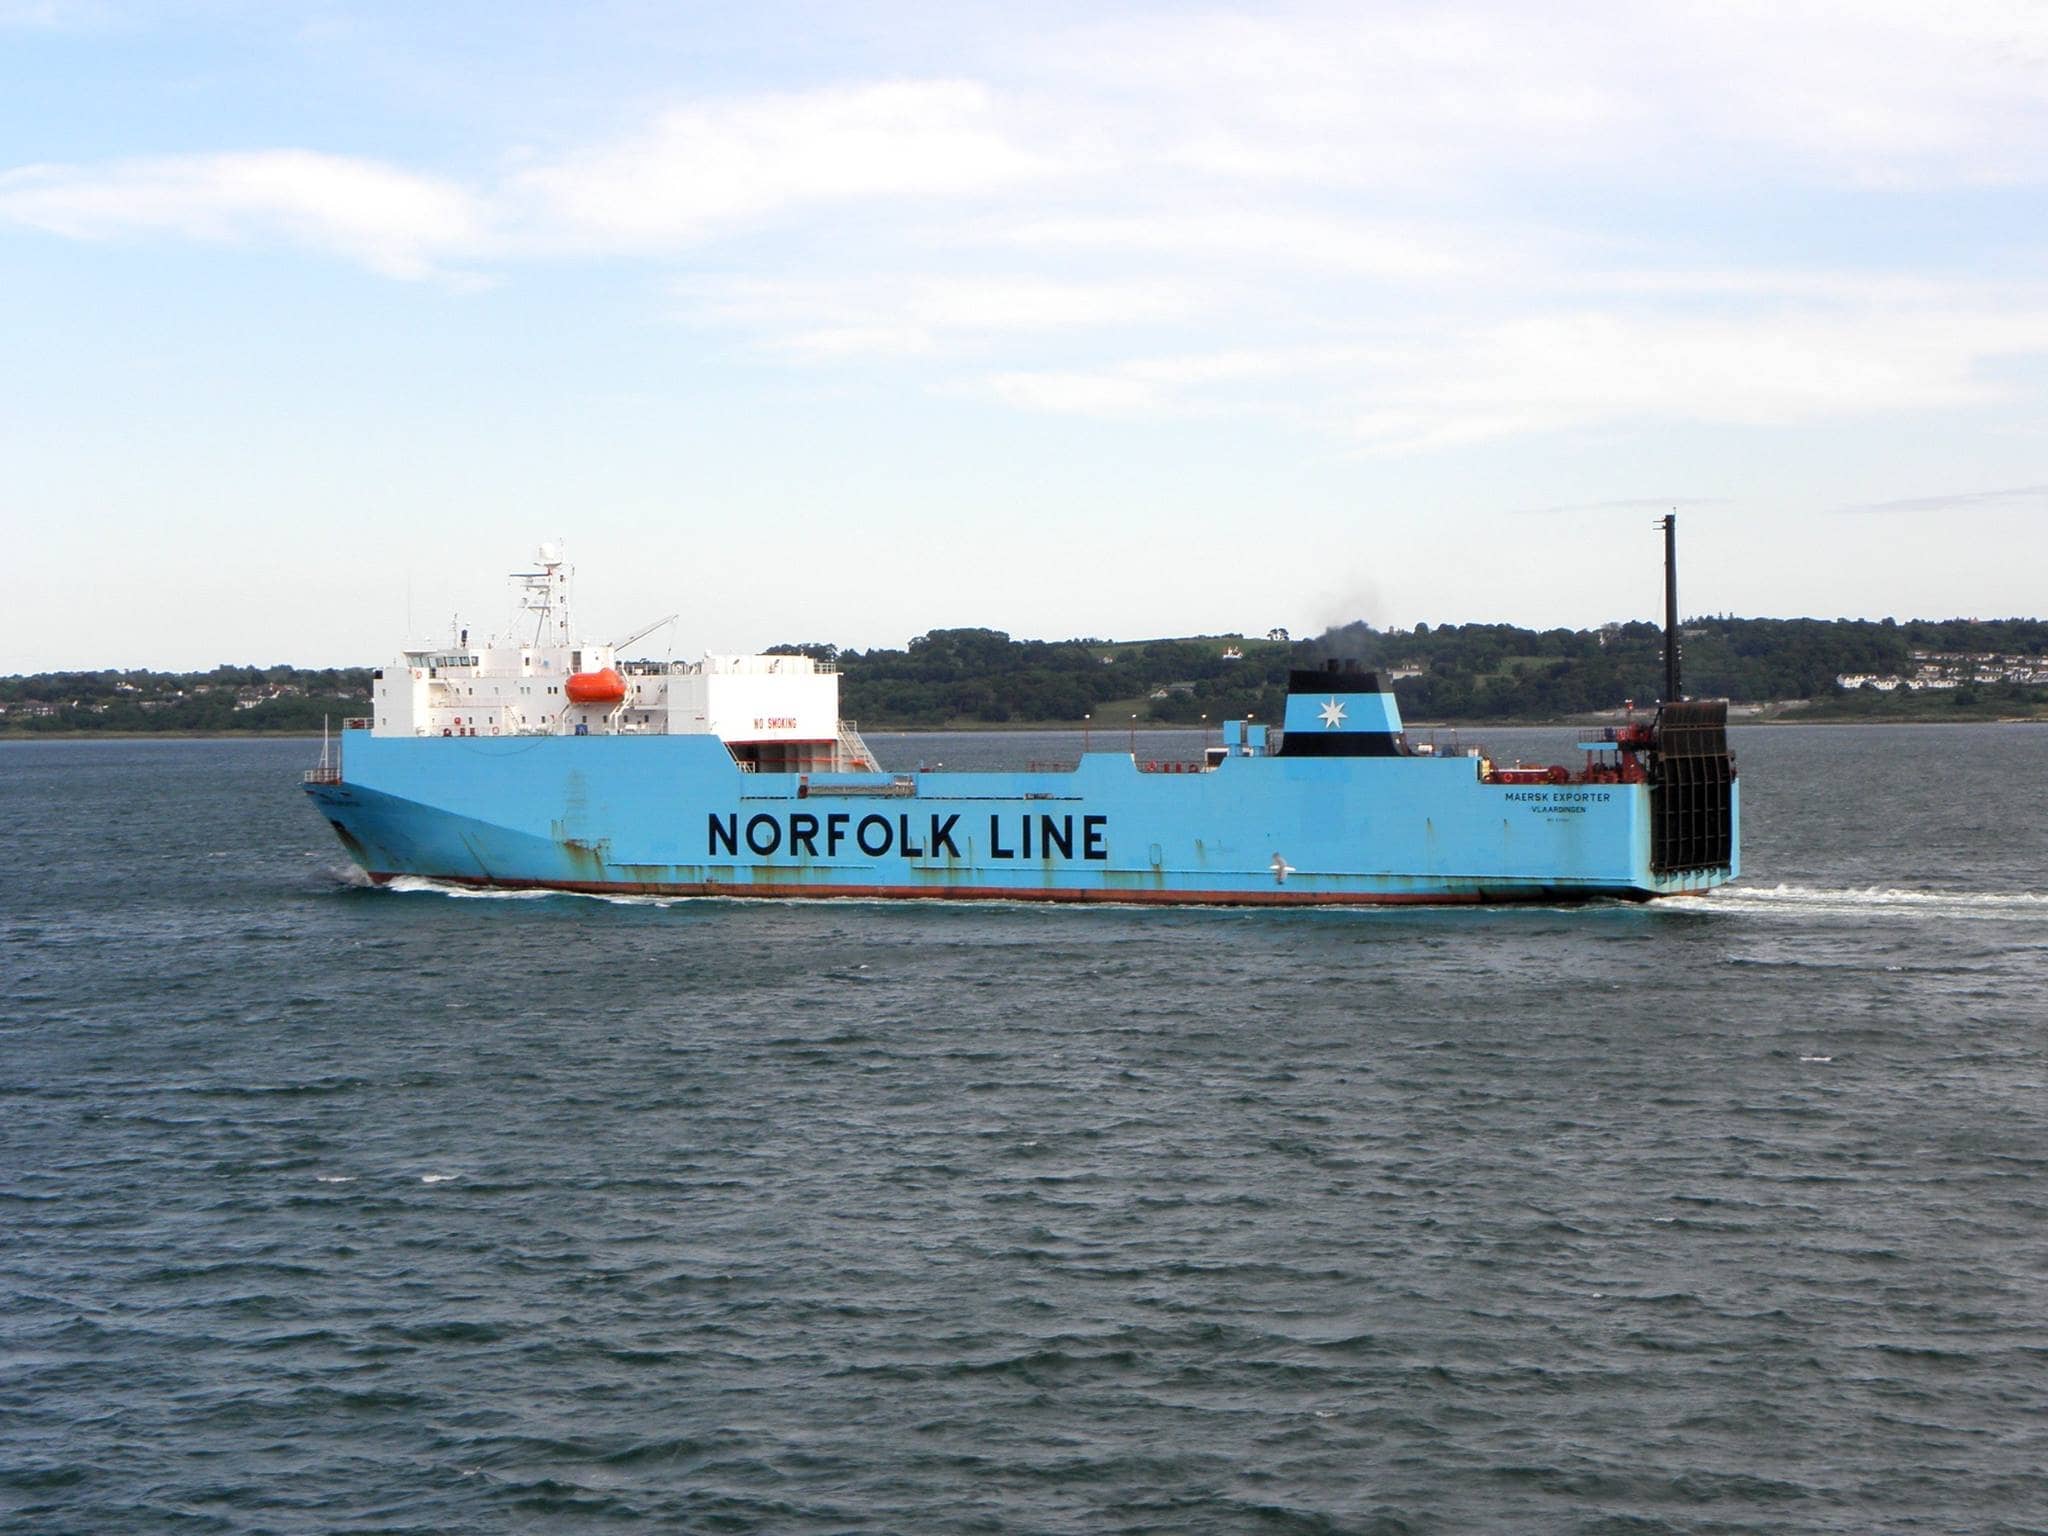 The Norfolk Line freight ferry MAERSK EXPORTER is seen here bound for Heysham. Copyright © Michael Livie.